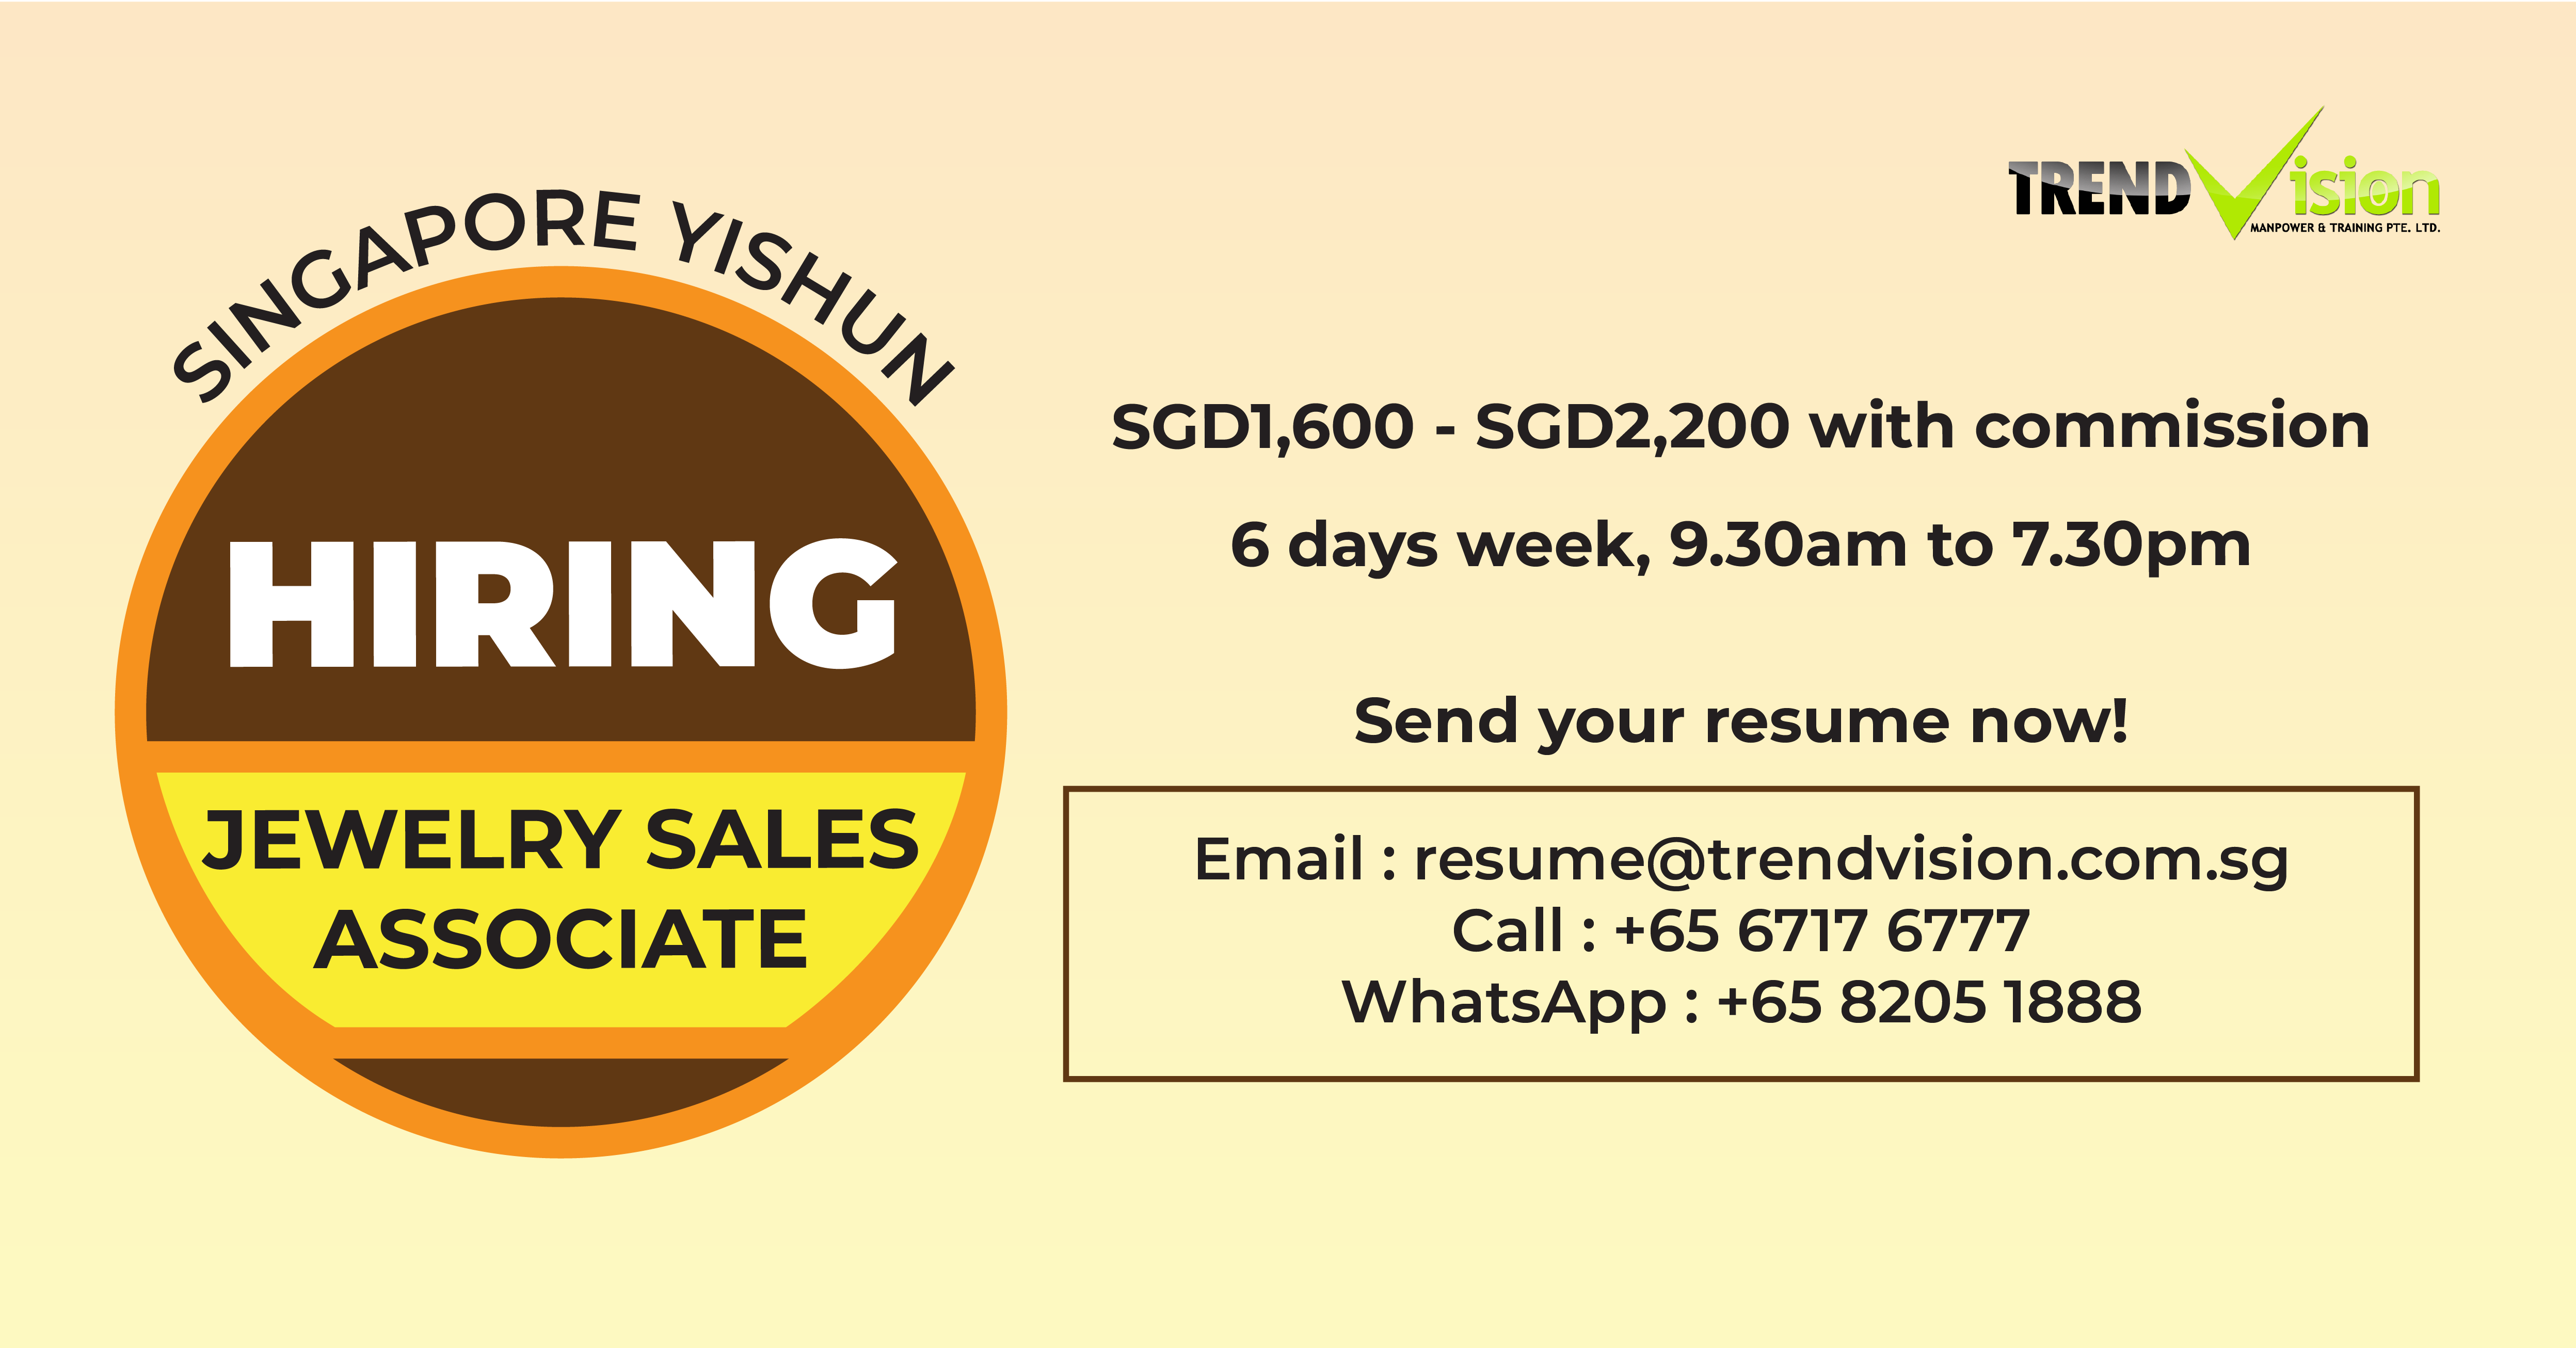 Trendvision | Find Jobs